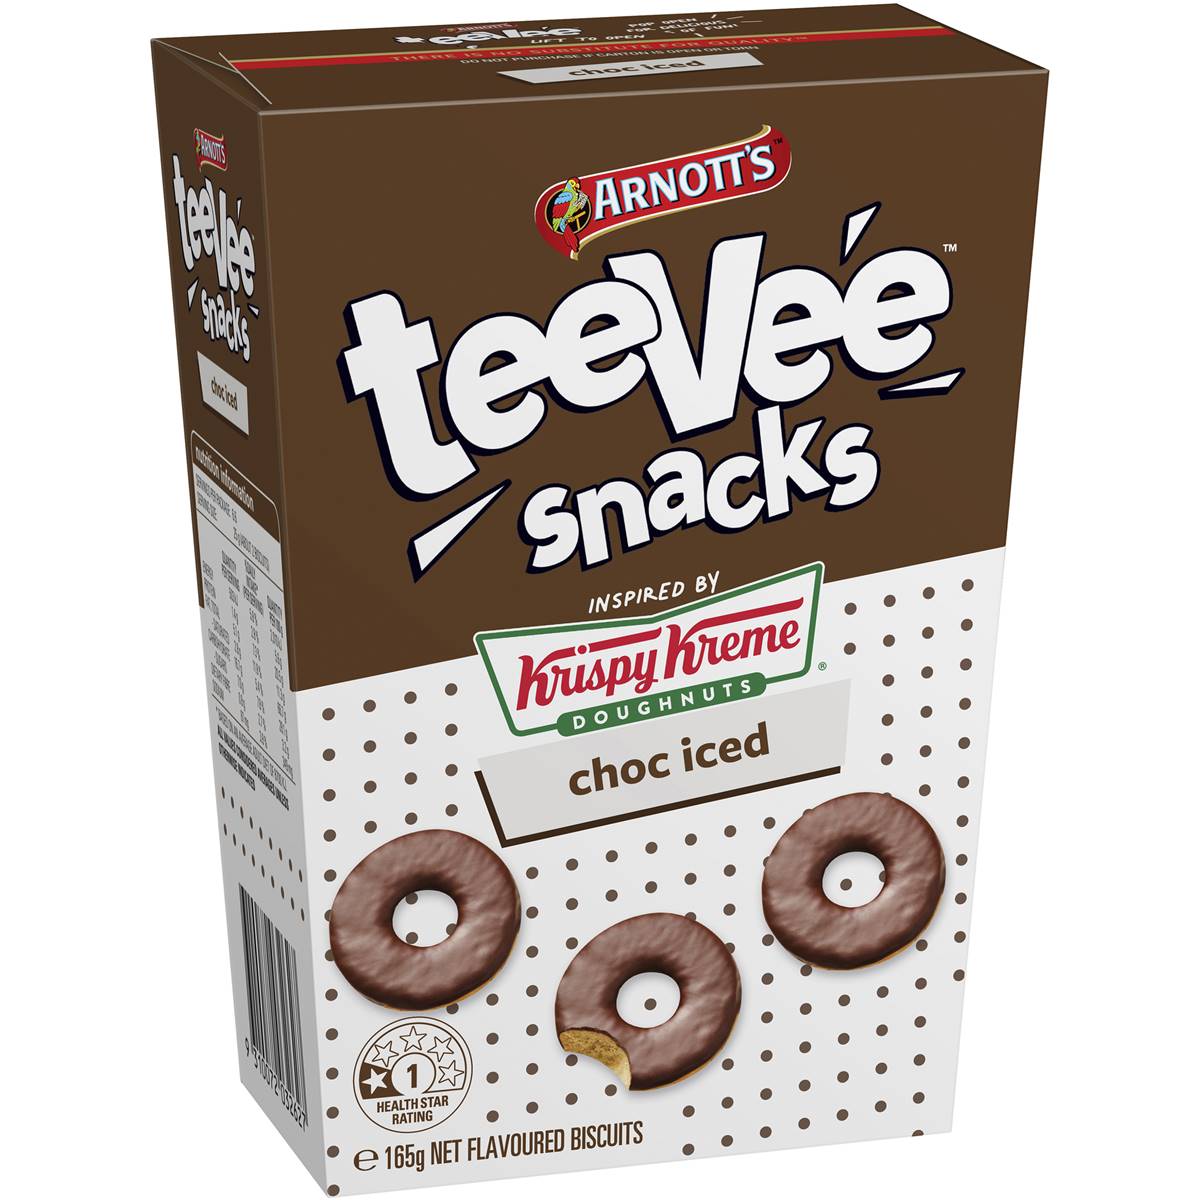 Arnott’s Krispy Kreme teeVee Snacks Choc Iced AUS 165g - Best before 29th March 2022